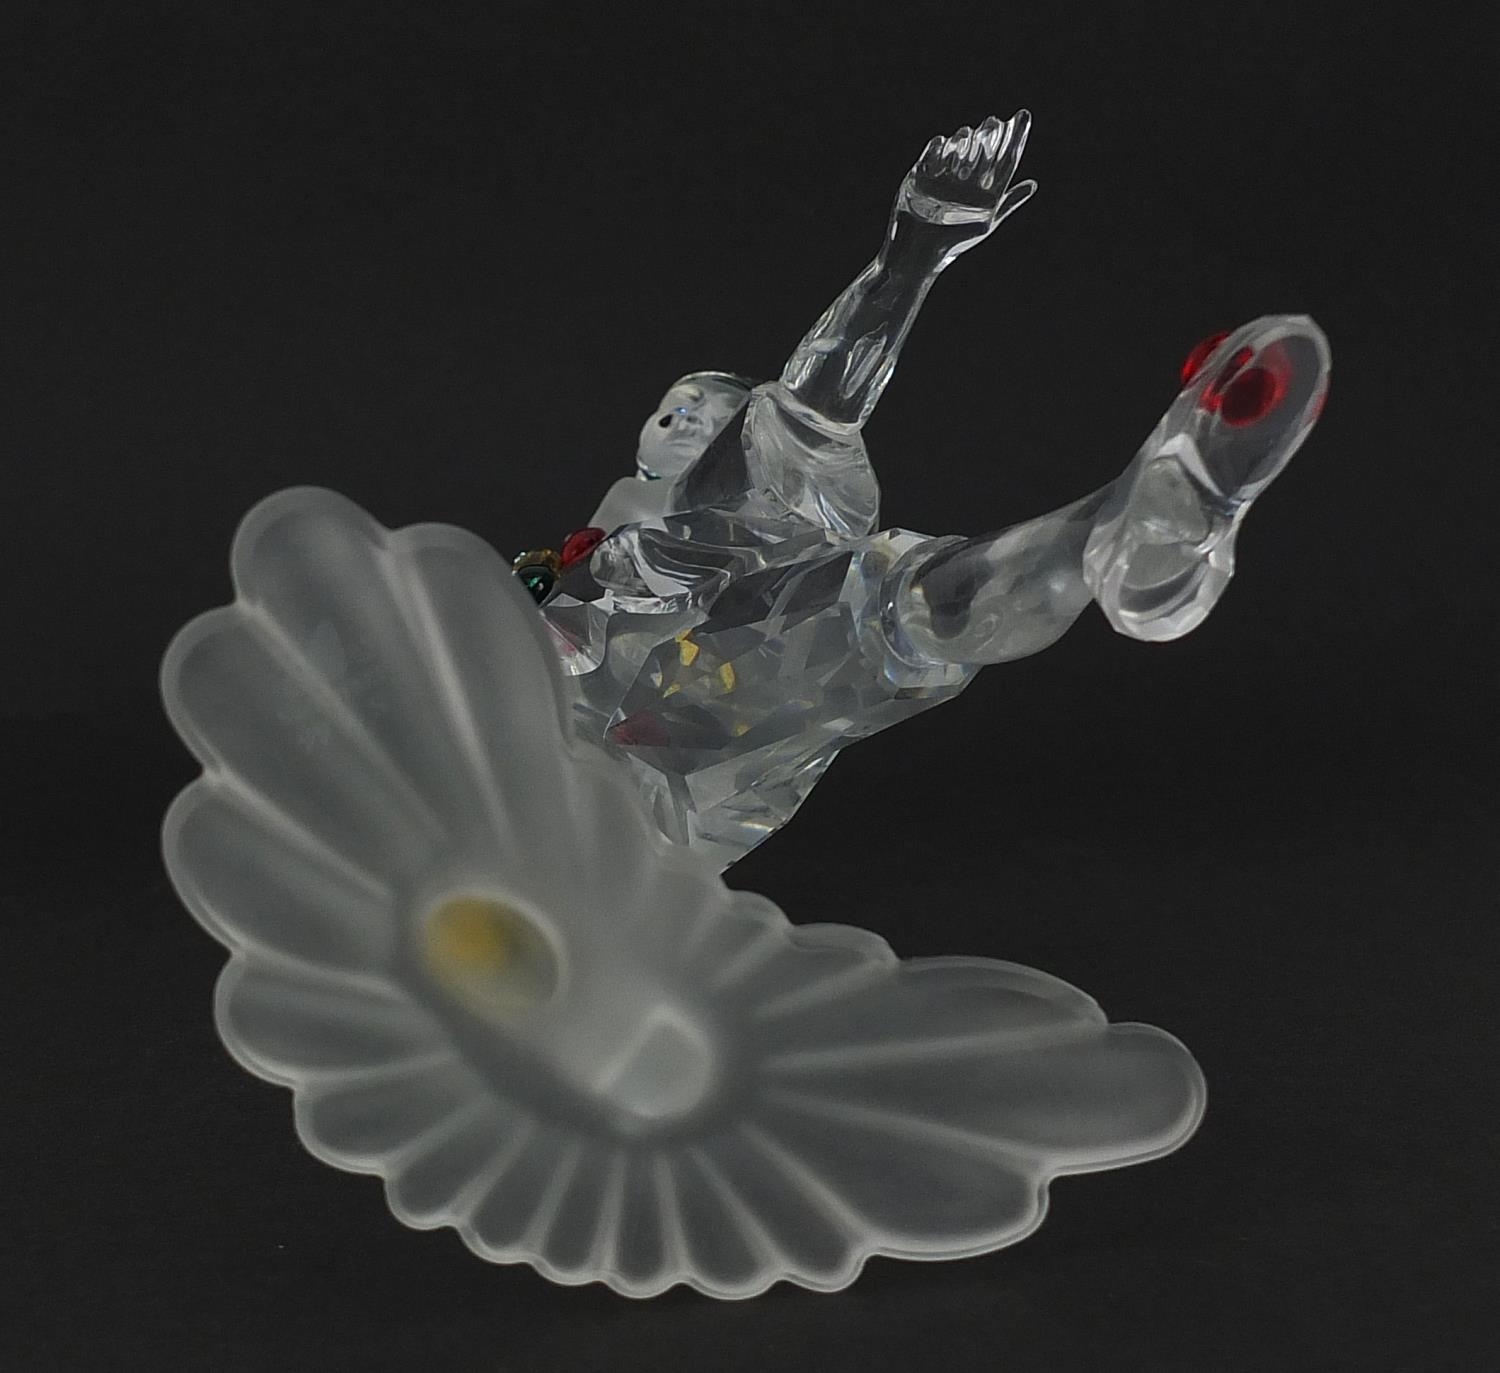 Swarovski crystal Masquerade Pierrot figure with box, 20cm high - Image 3 of 6